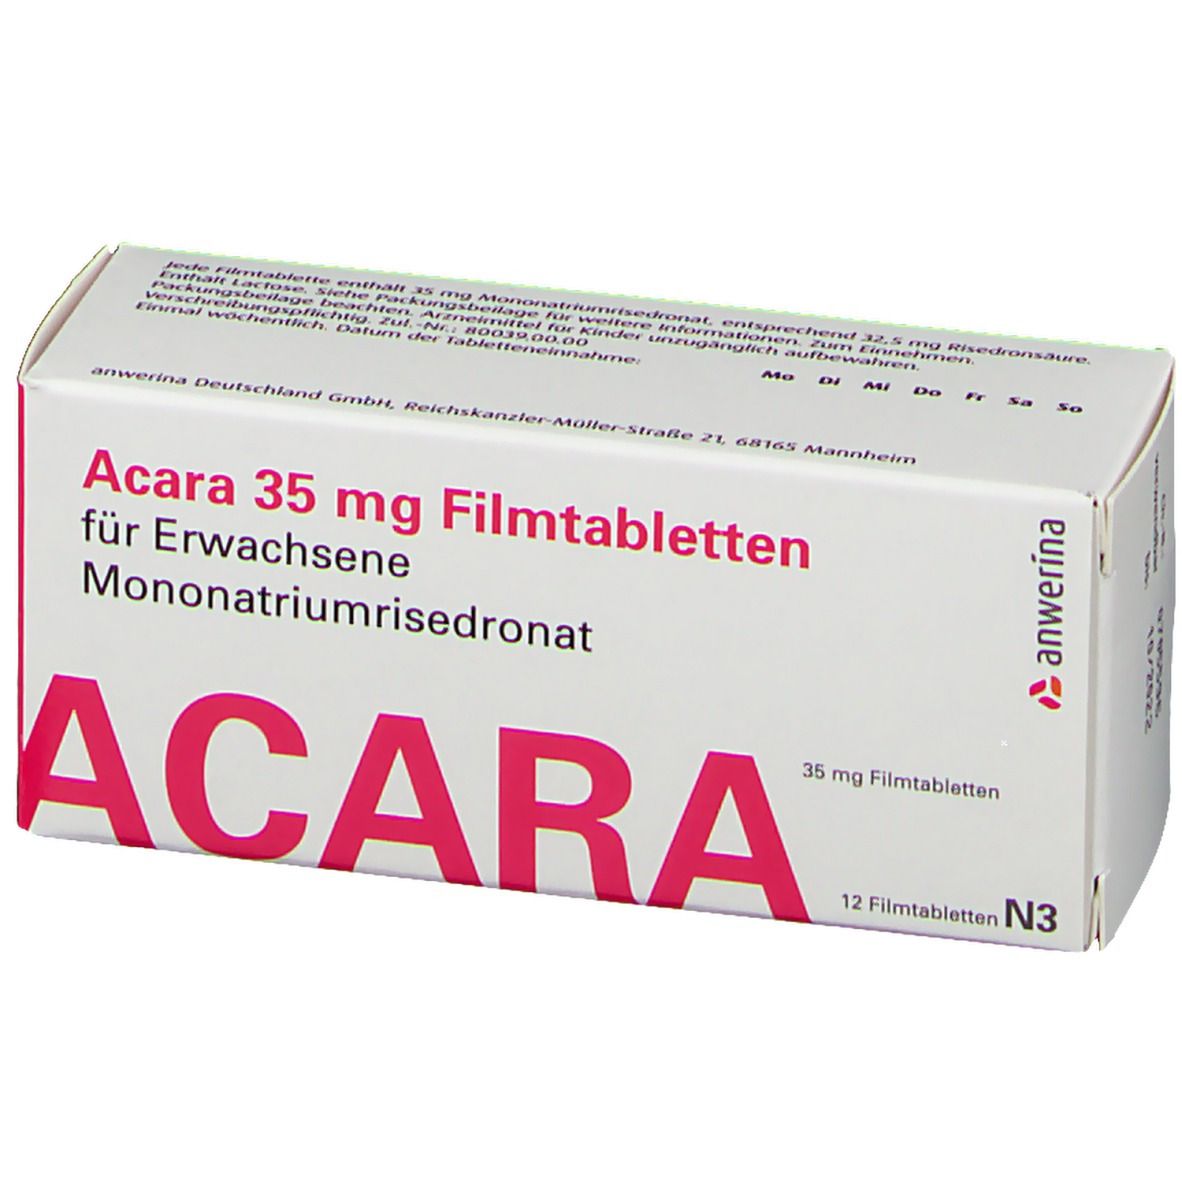 Acara 35 mg